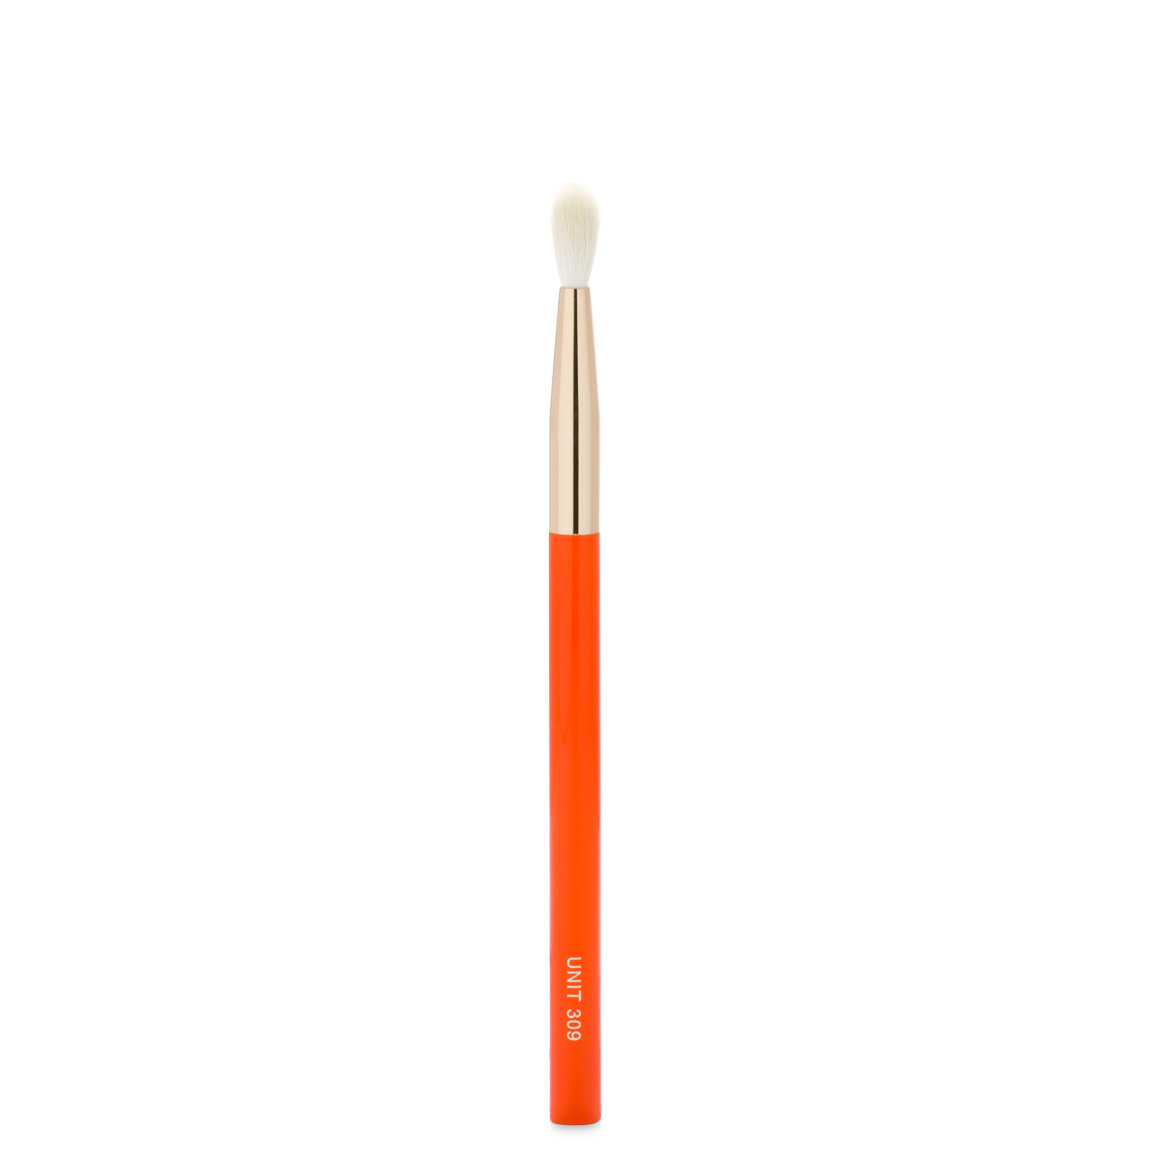 UNITS Orange Series UNIT 309 Crease Eye Brush alternative view 1 - product swatch.